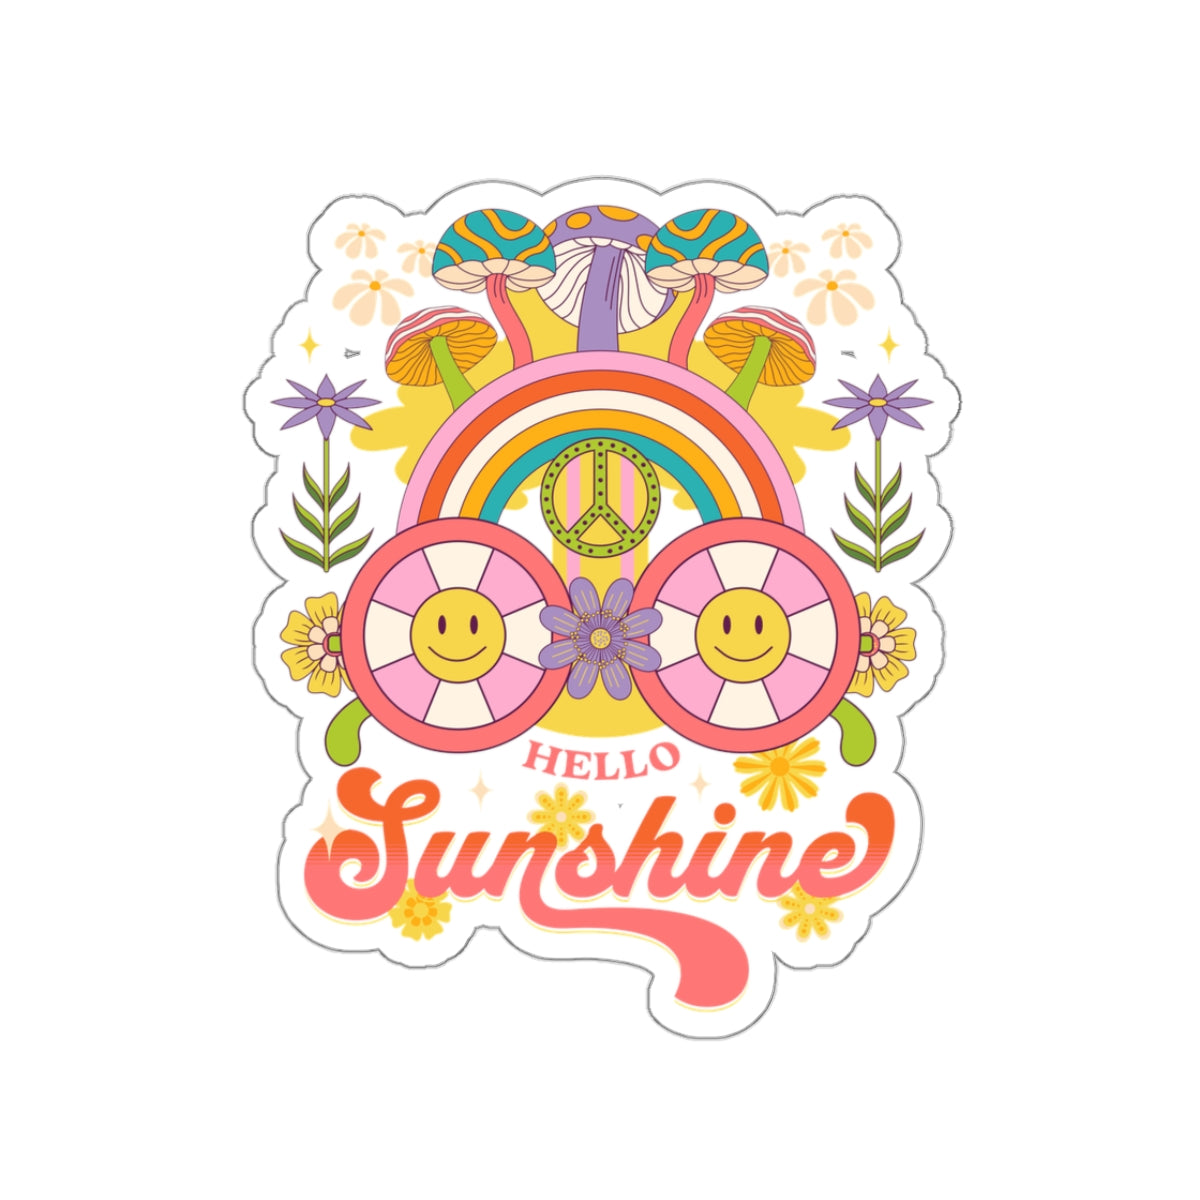 Hello Sunshine Retro Groovy Sticker - Kiss-Cut Sticker